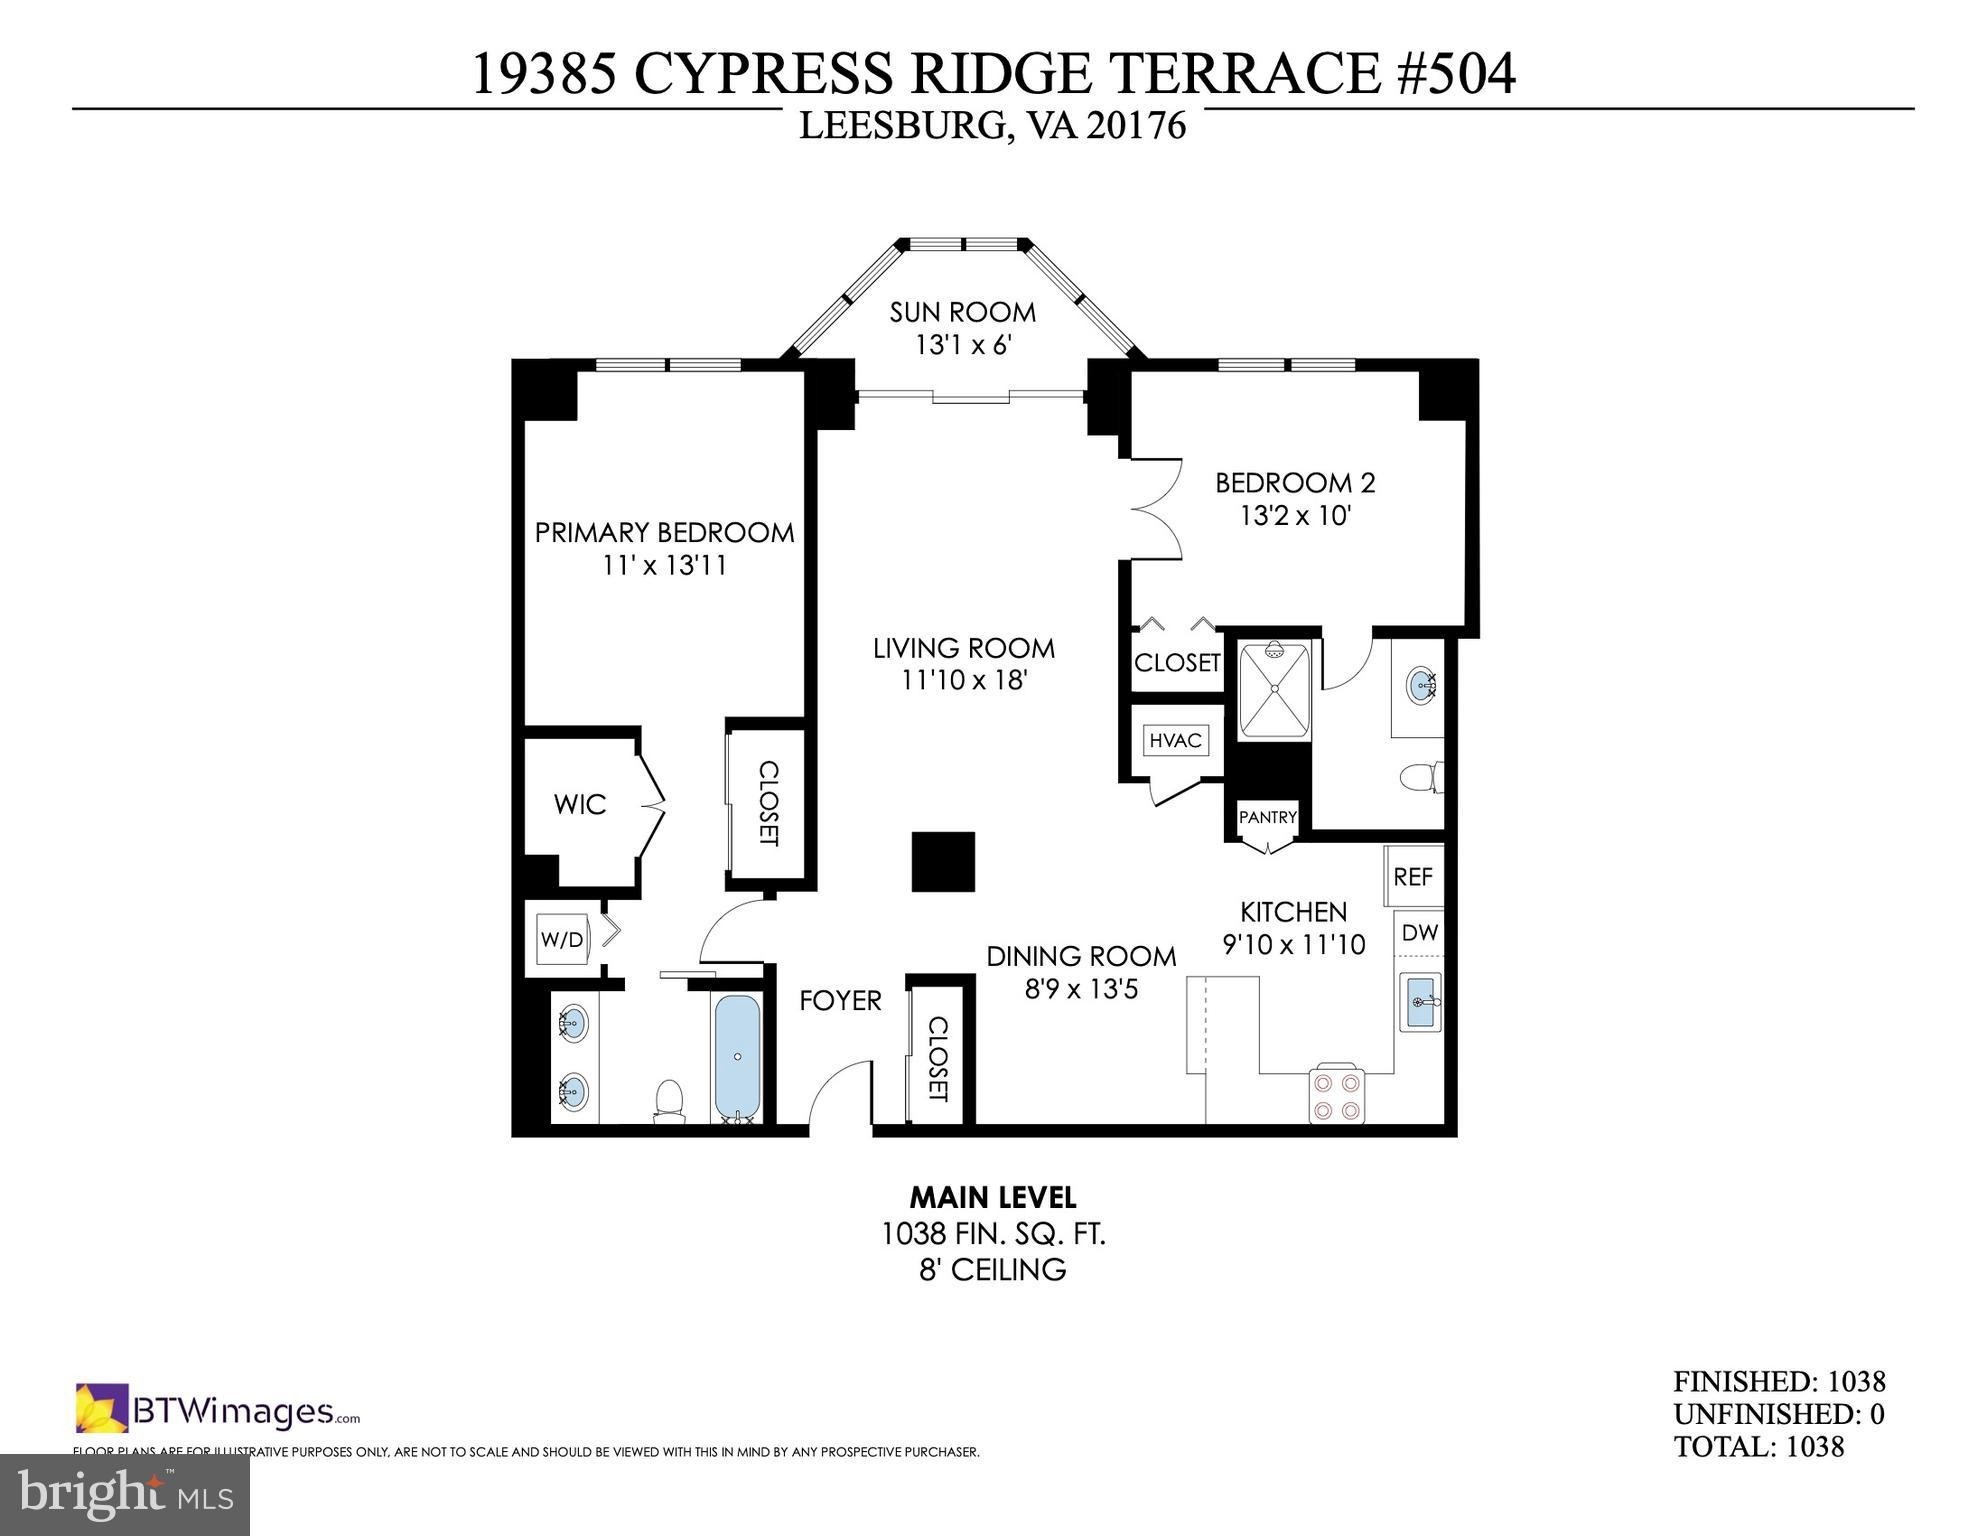 2. 19385 Cypress Ridge Terrace